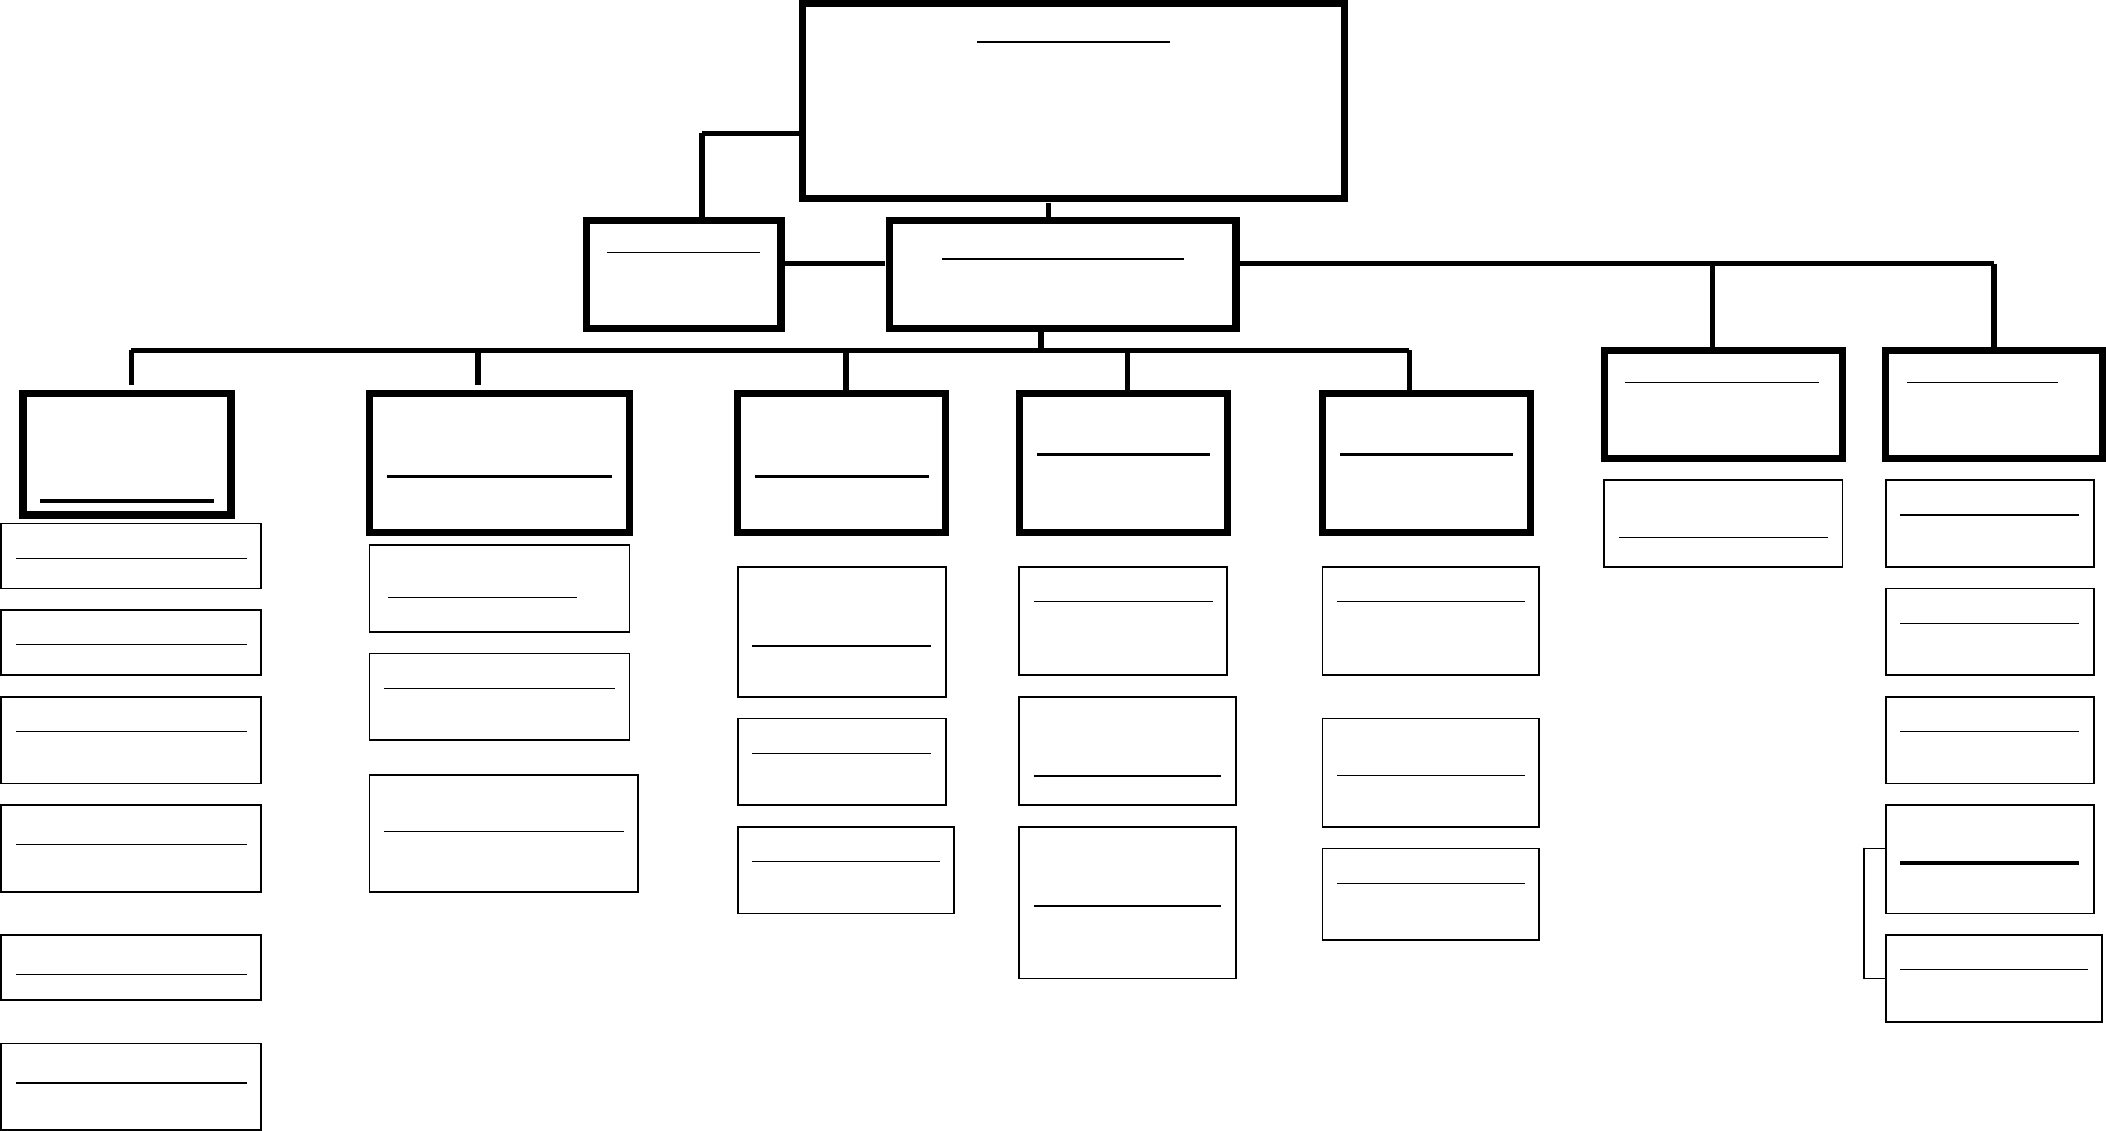 Free Blank Organizational Chart - Guna Pertaining To Free Blank Organizational Chart Template